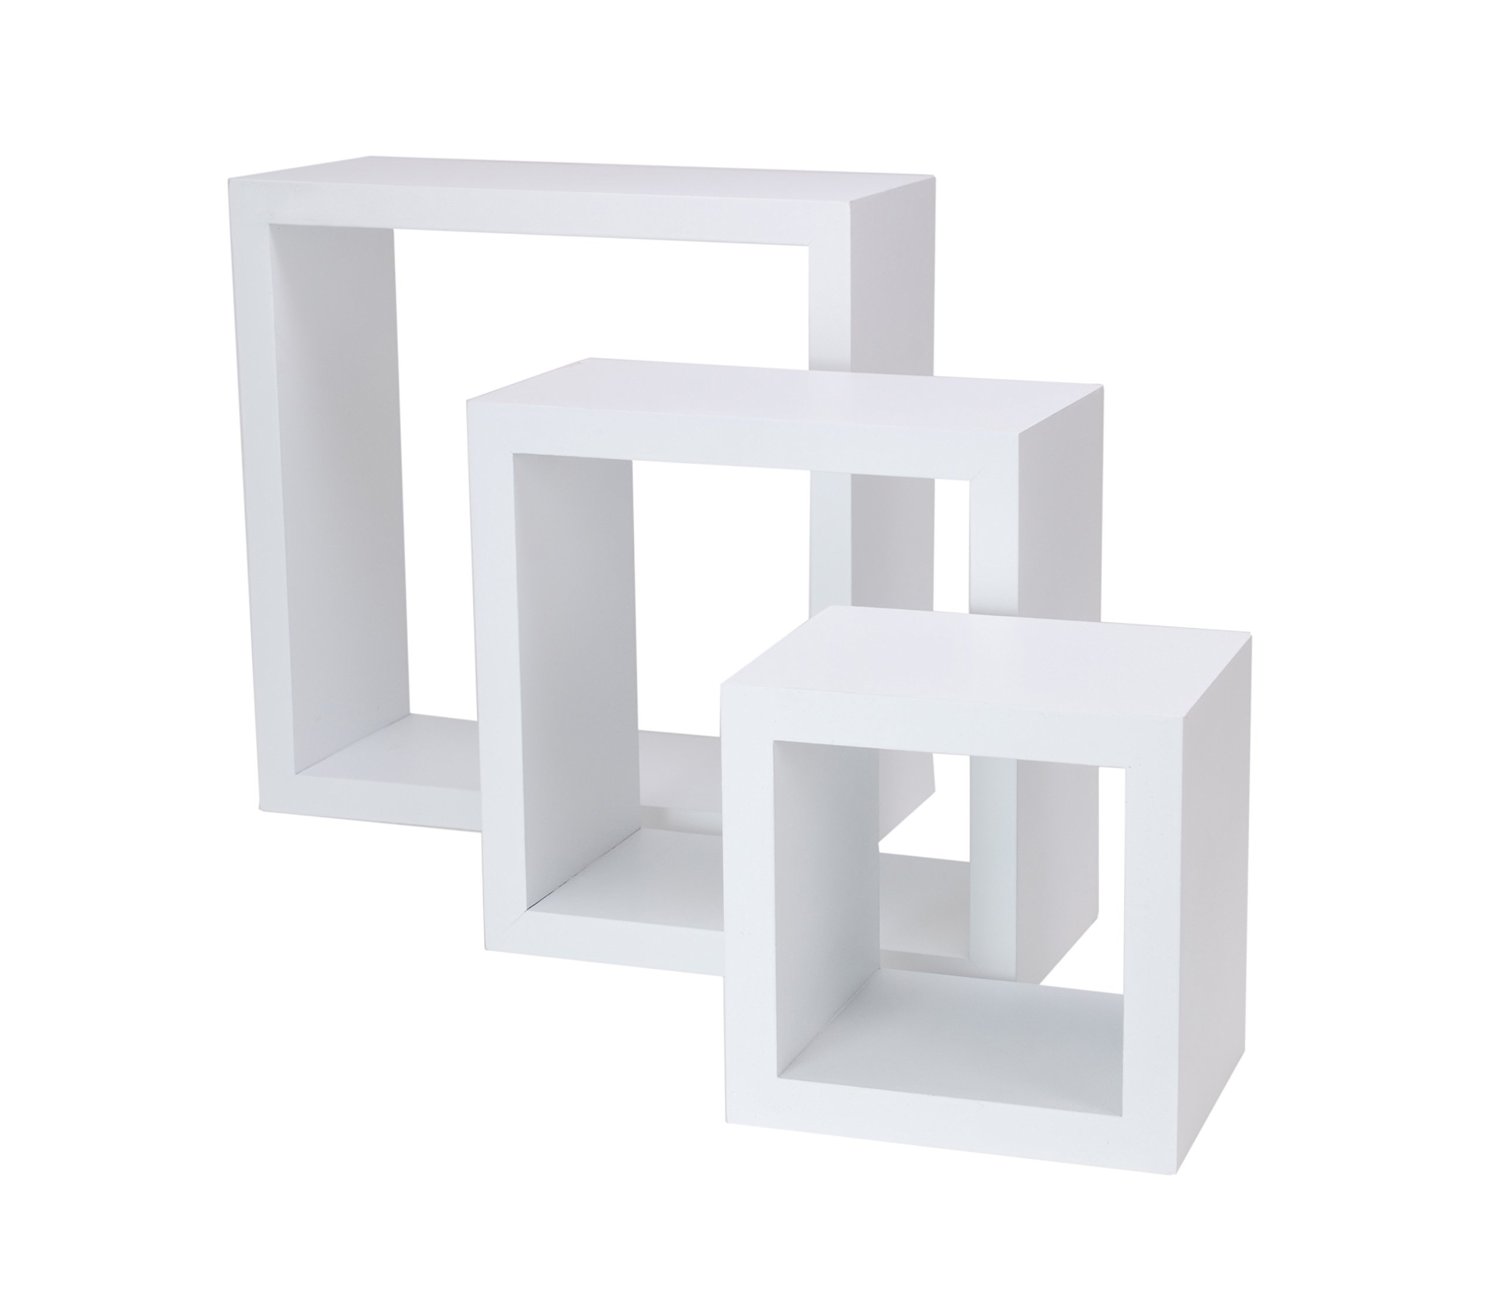 Floating Shelf Wall Home Shelves Cube Display Mount Storage Square 3 Set White